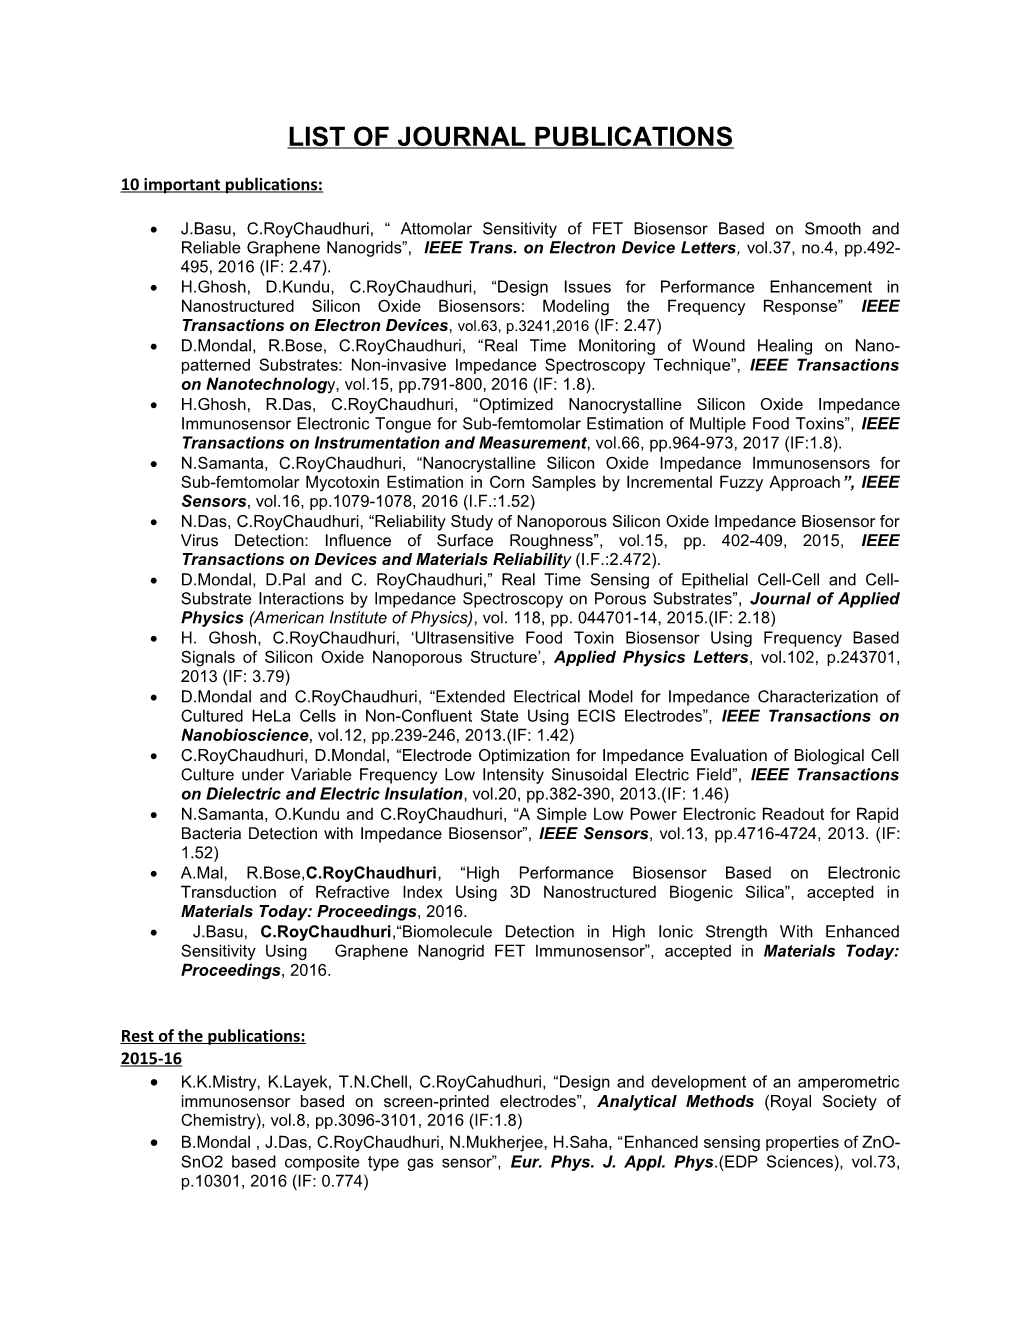 List of Journal Publications